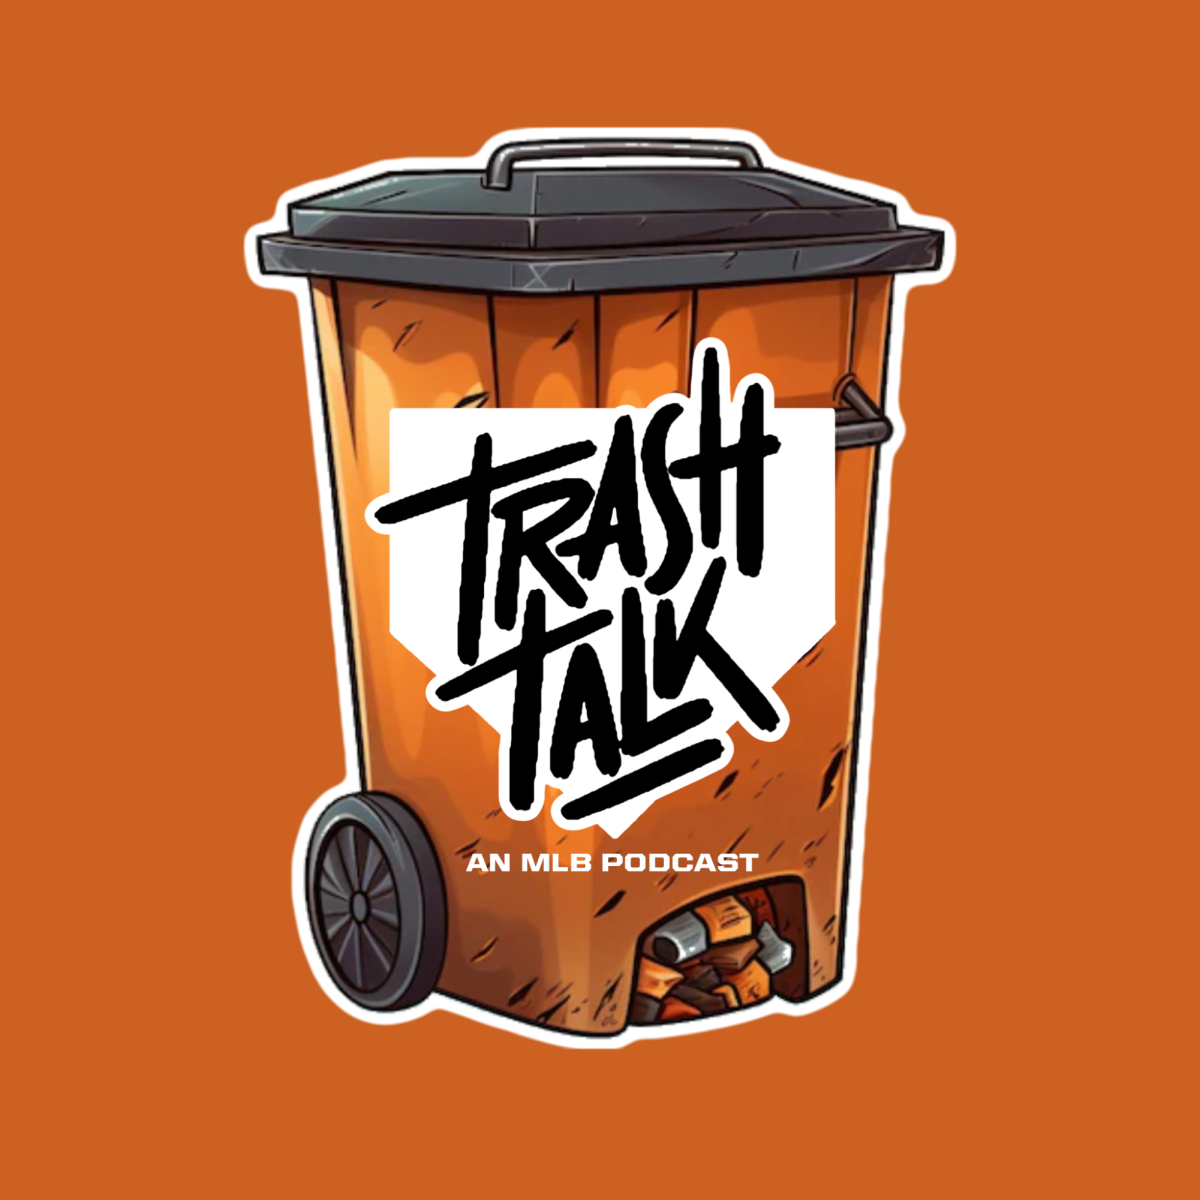 The+official+logo+of+the+Trash+Talk+podcast.+Photo+credit%3A+Joel+Carpio